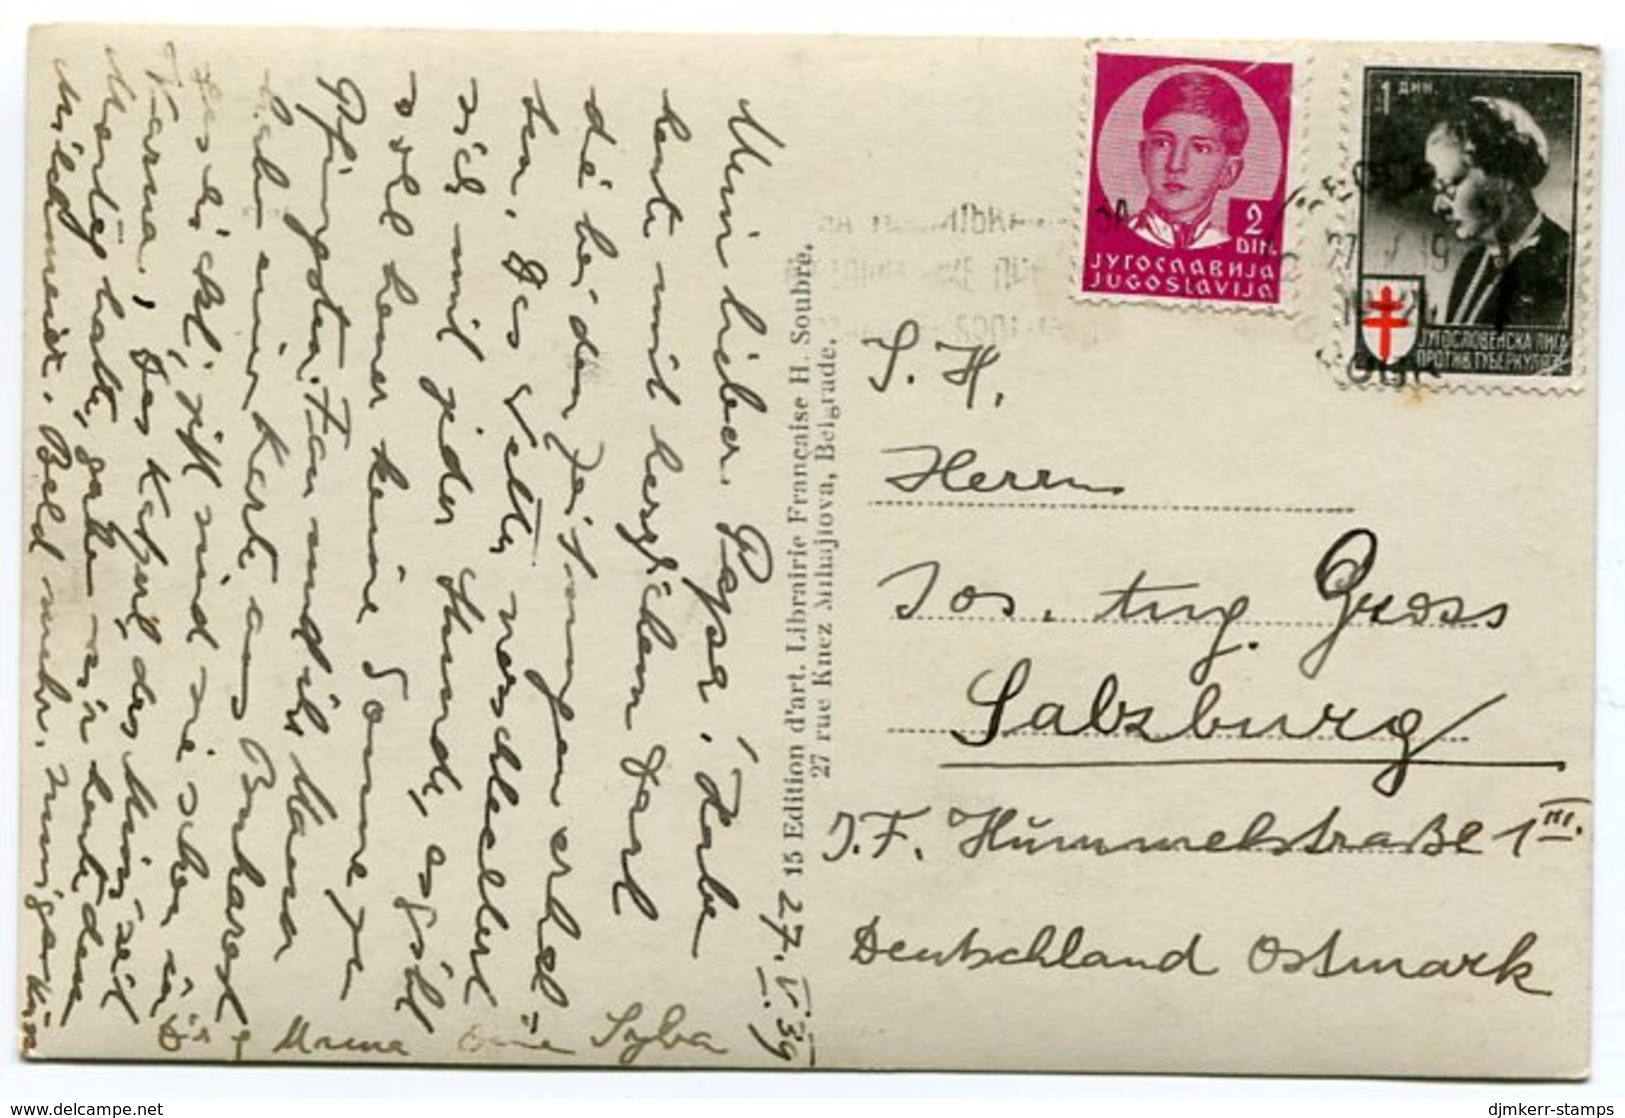 YUGOSLAVIA 1939 Anti-TB League Charity Label Used On Postcard. - Liefdadigheid